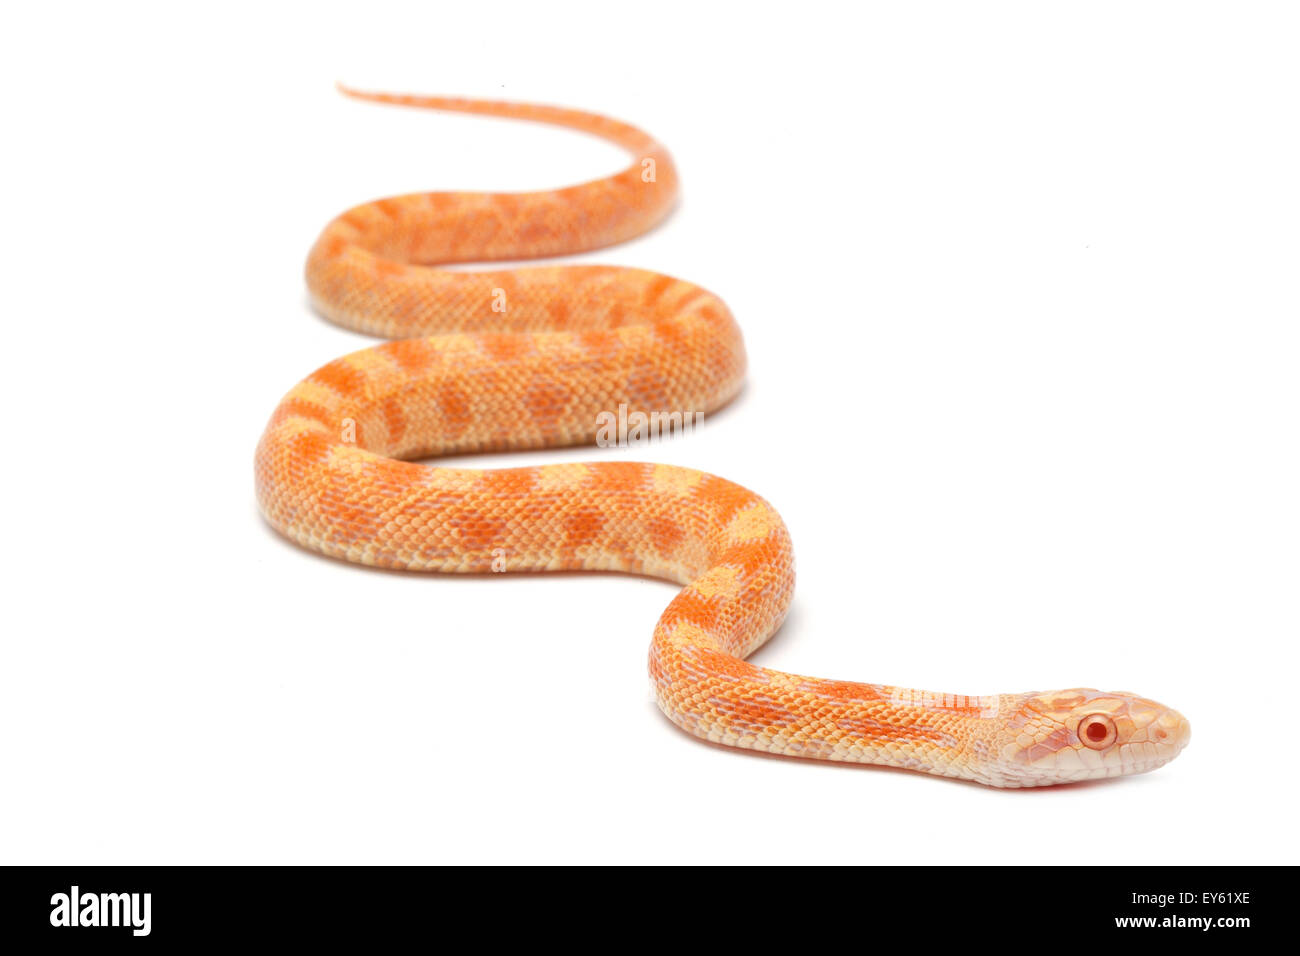 Texas rat snake "Albino" sobre fondo blanco. Foto de stock